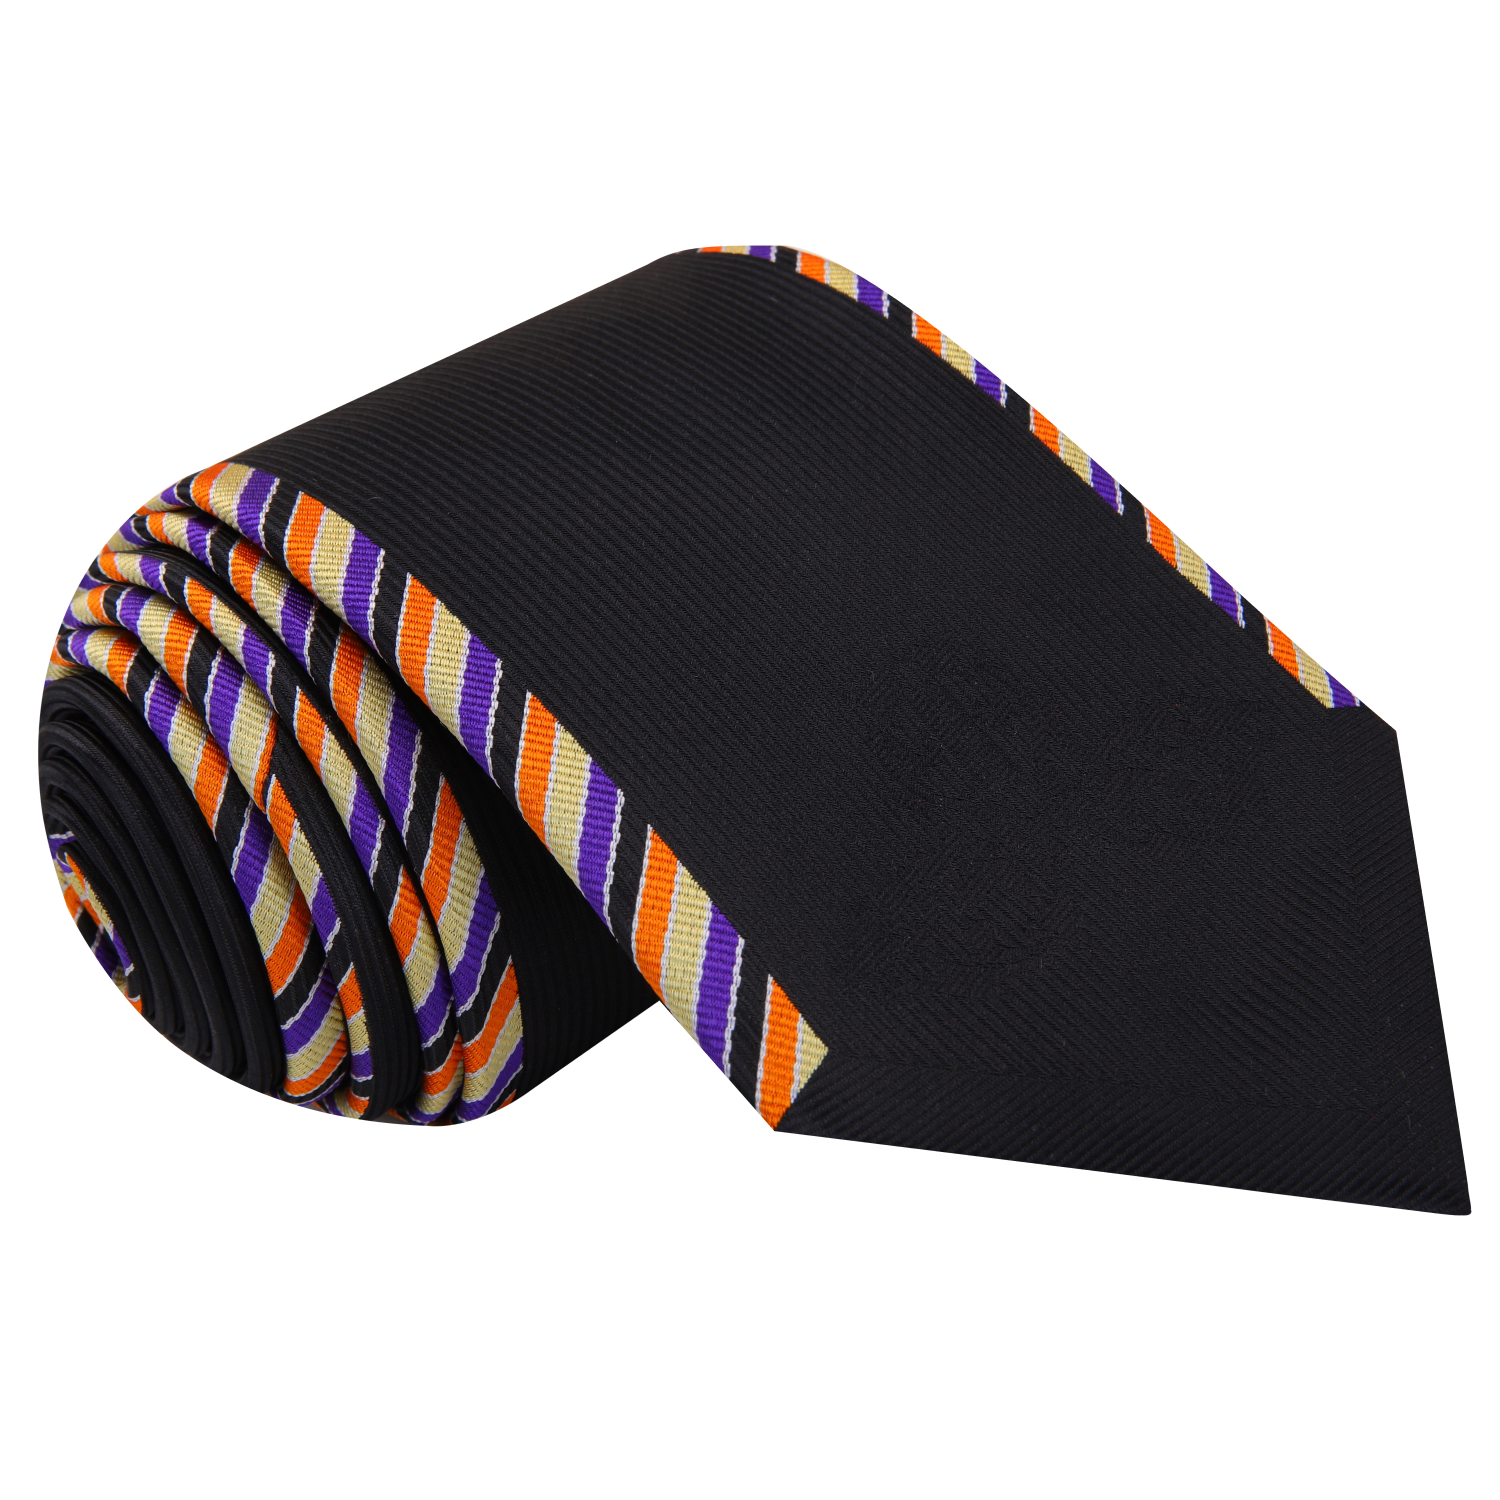 Black Necktie with Colorful Edge